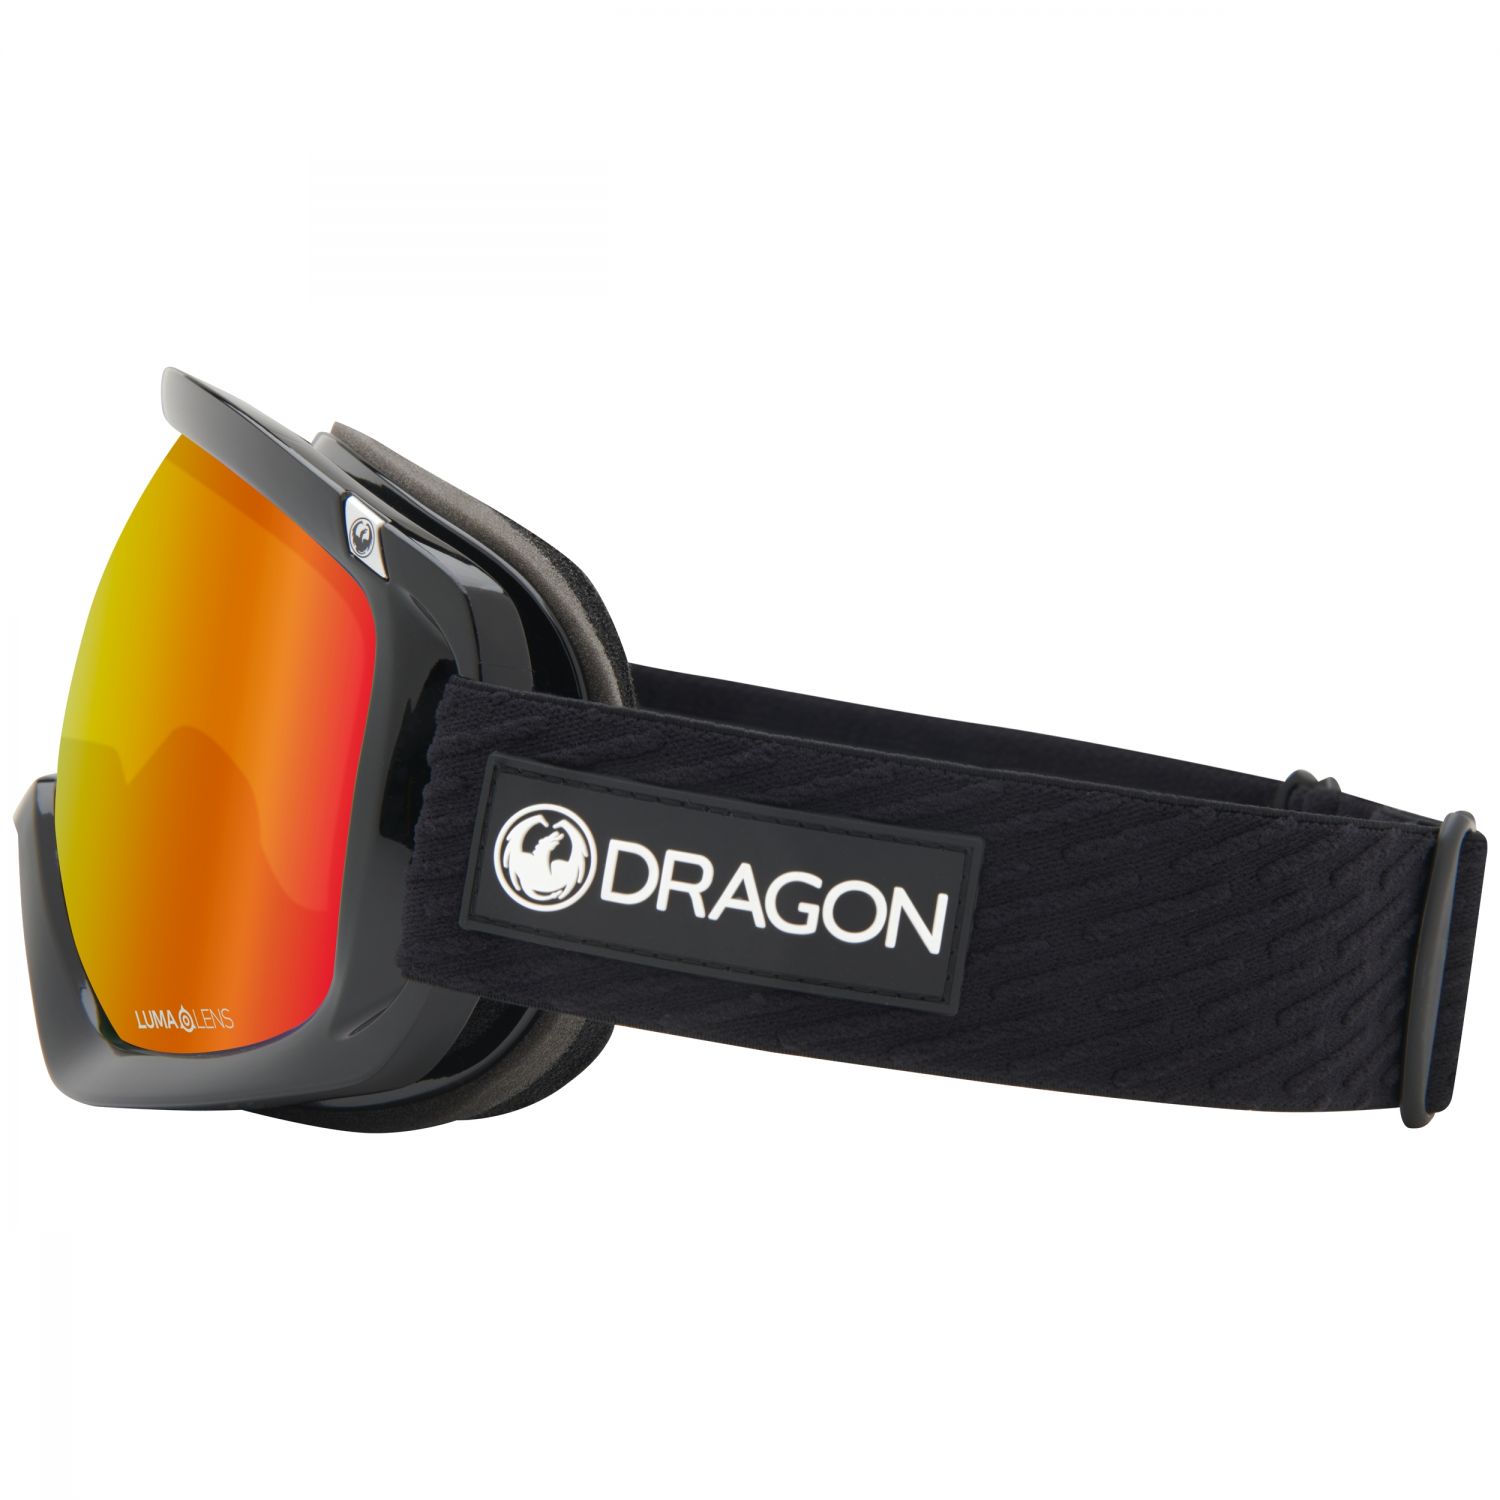 Dragon D3 OTG, ski bril, icon red